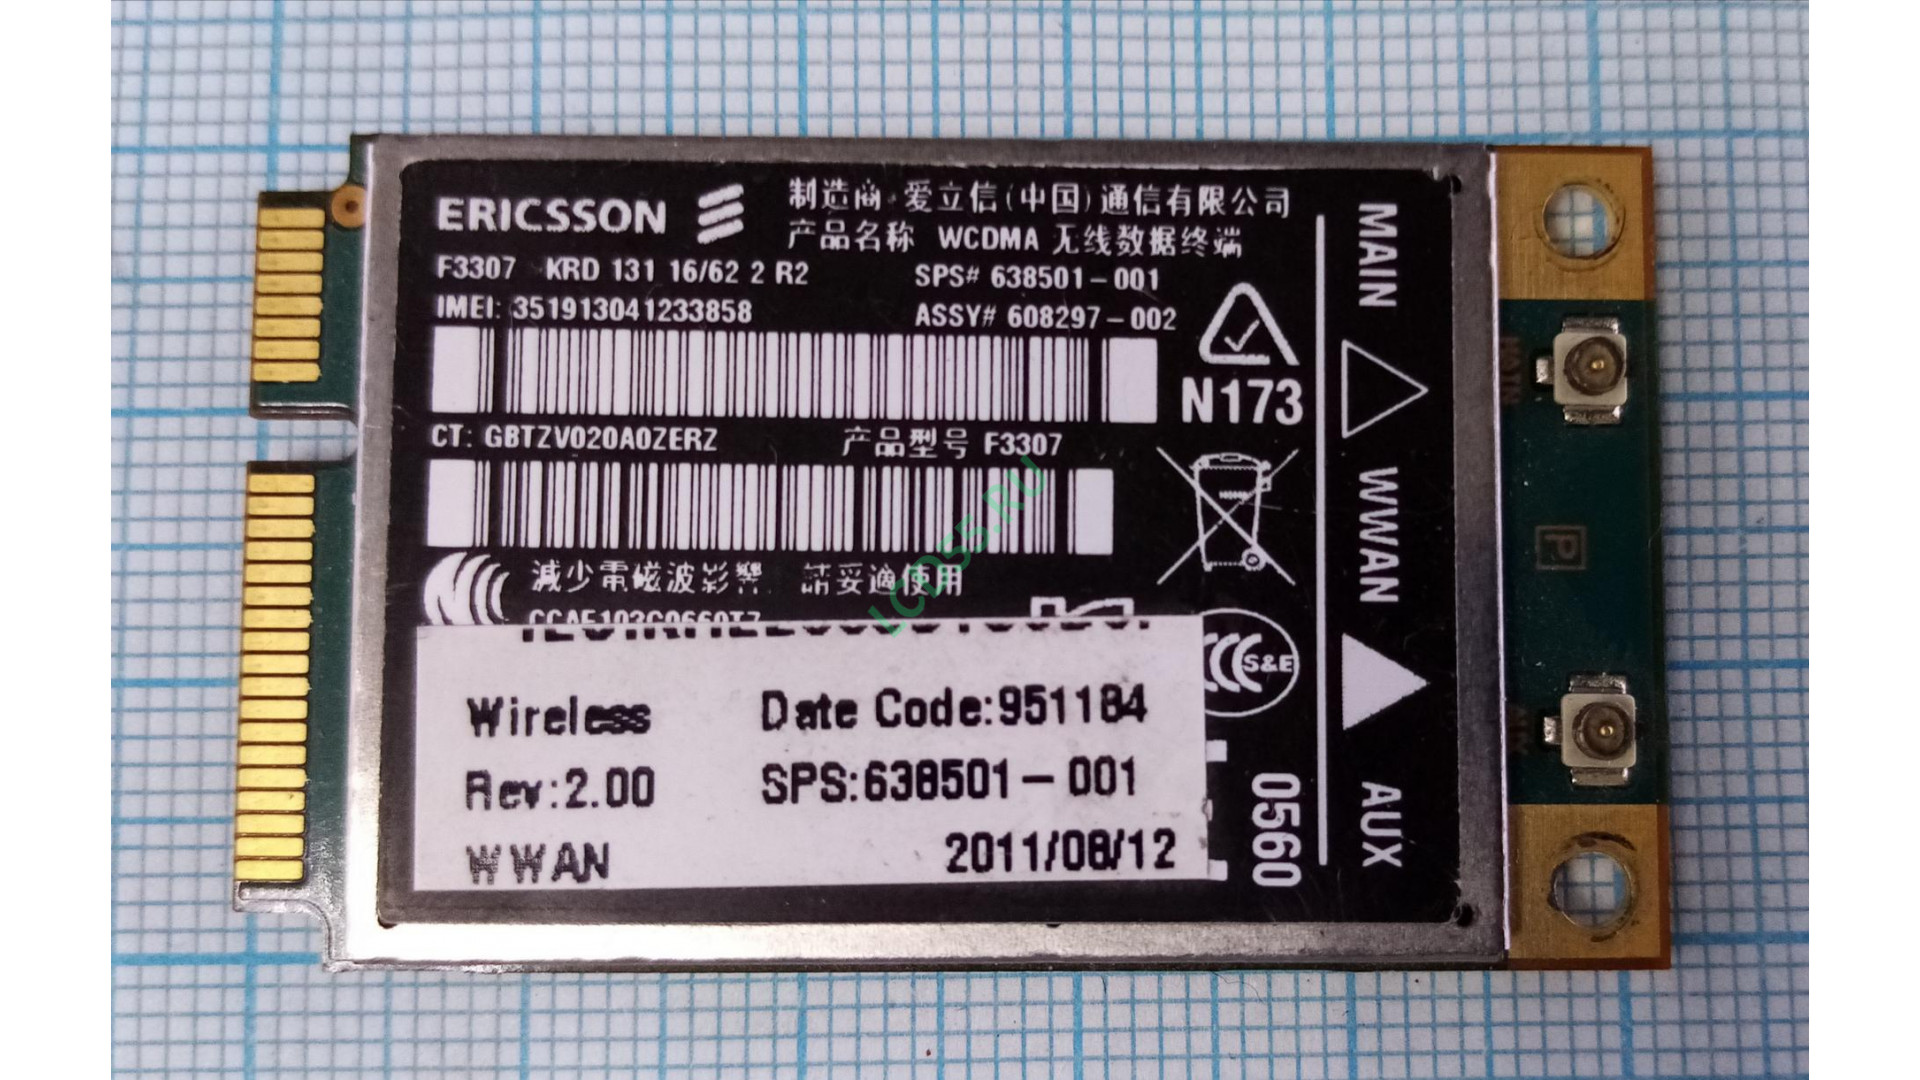 3G модем Ericsson F3307 2G 3G HSDPA 7,2 MB GSM GPRS WWAN